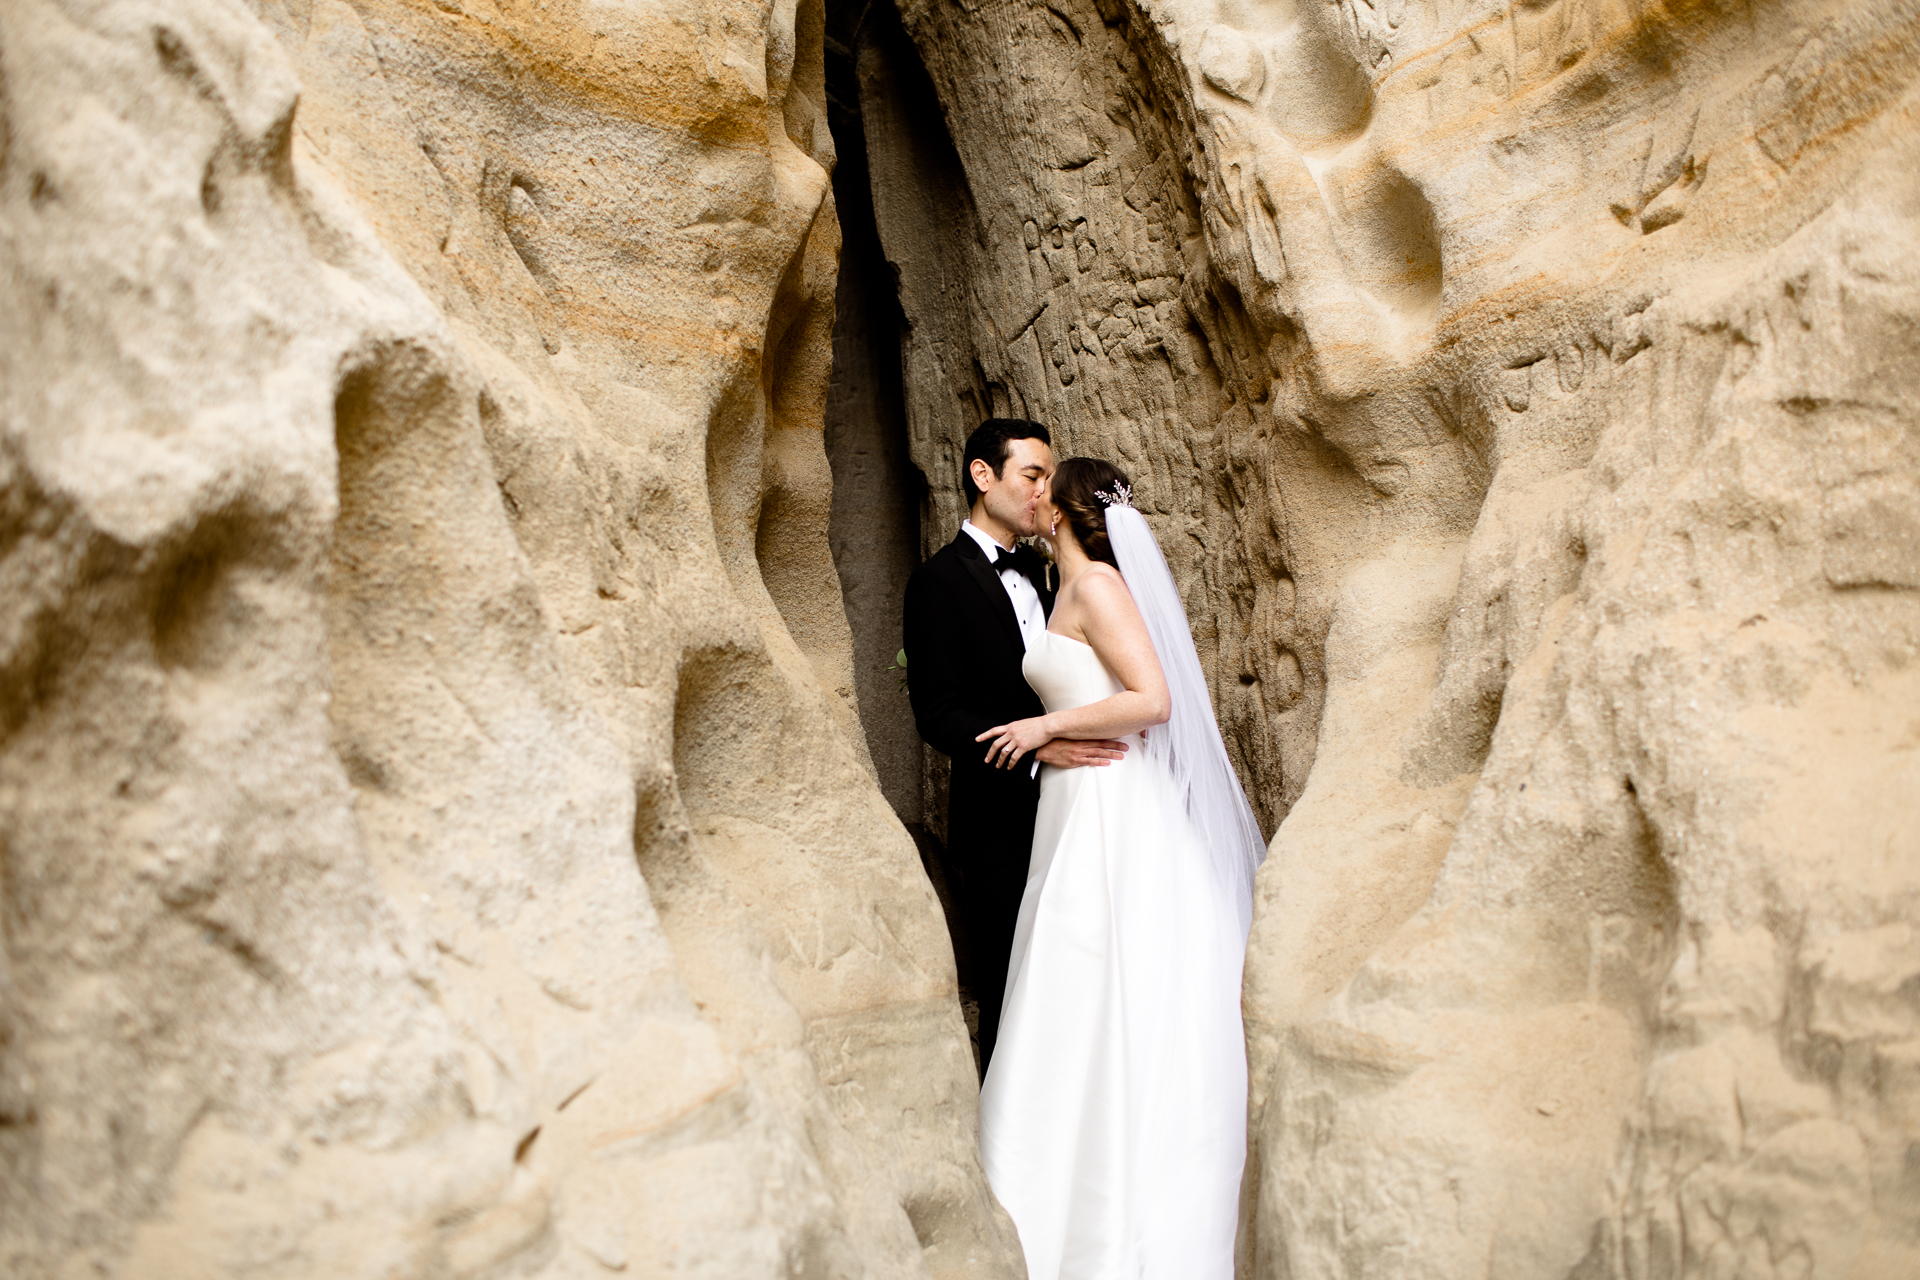 San Clemente beach bride and groom wedding portraits